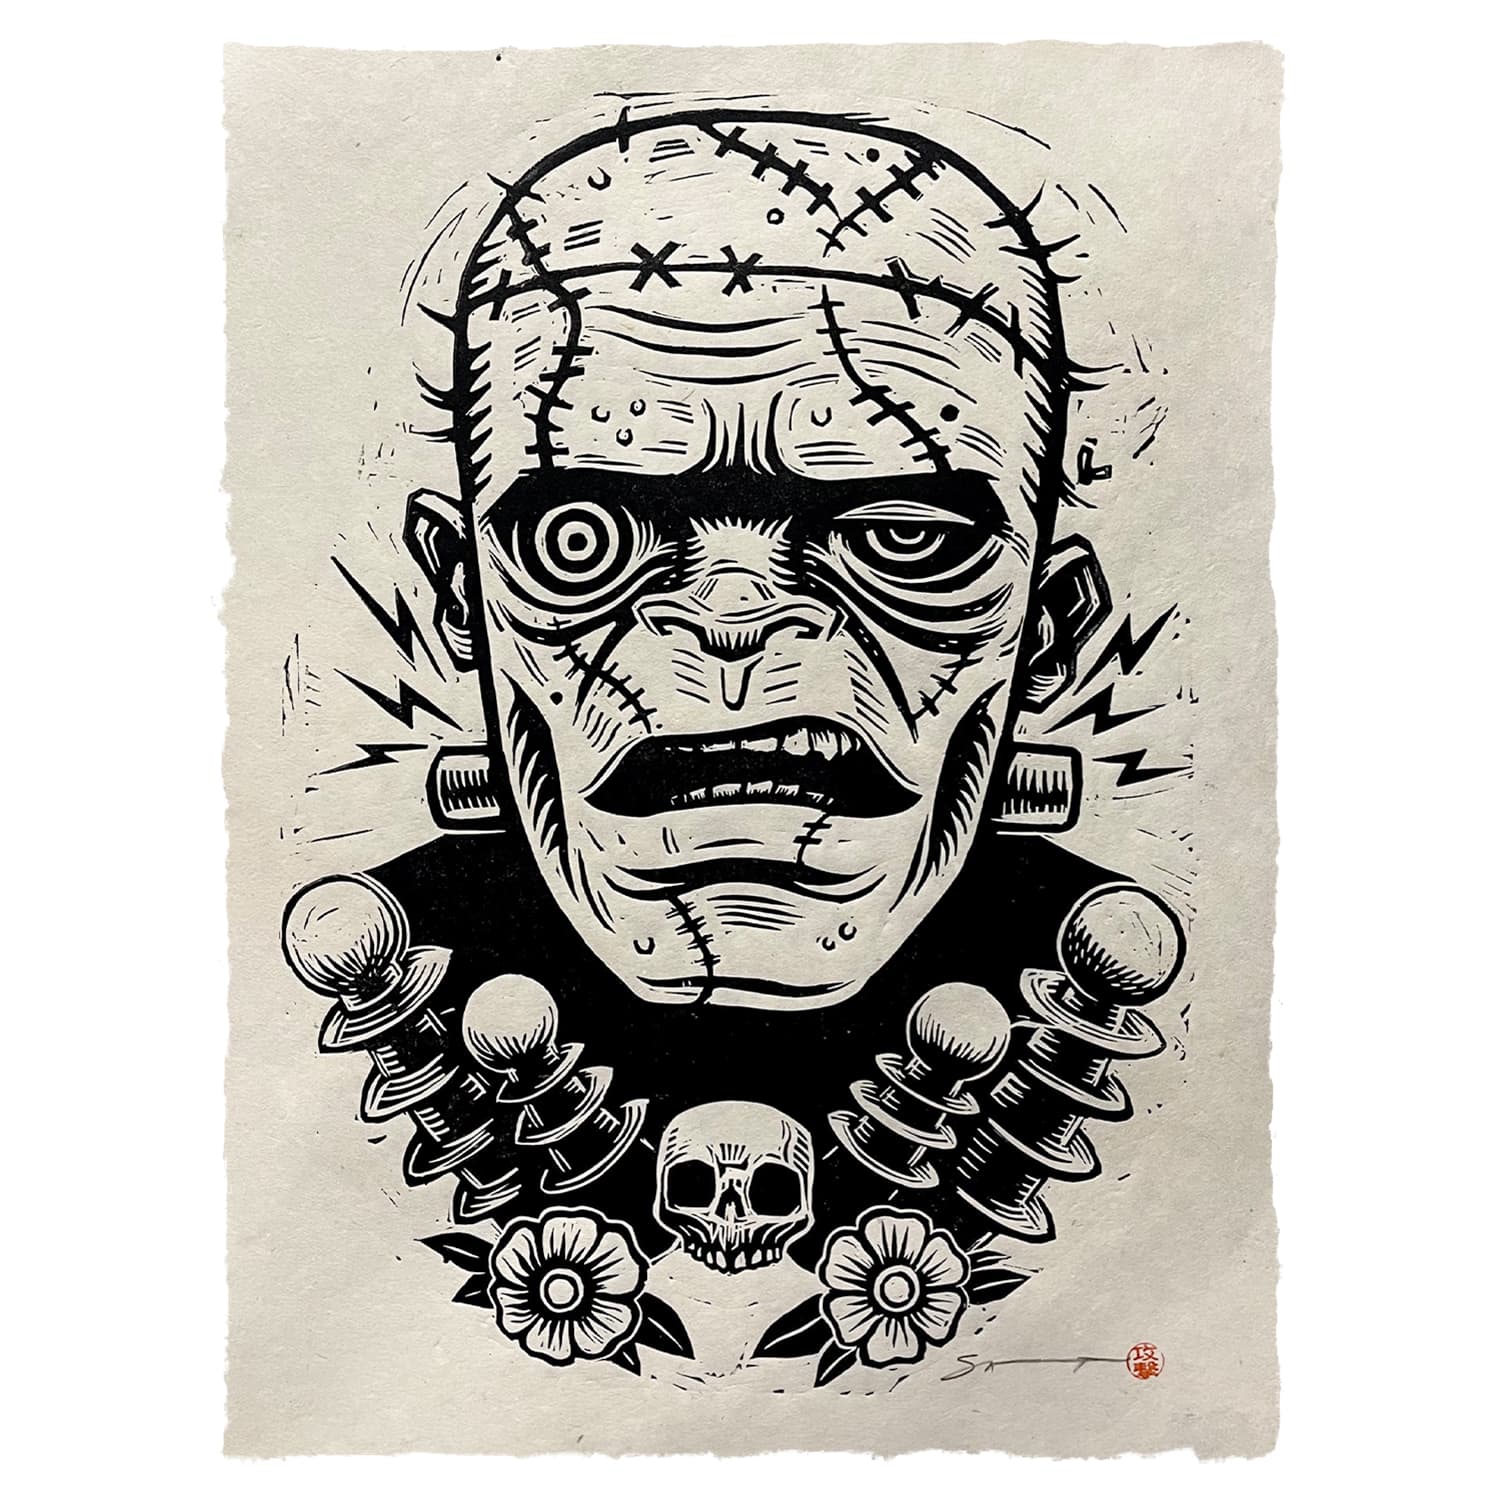 Attack Peter Frankenstein Month of Monsters - Hand Block Print